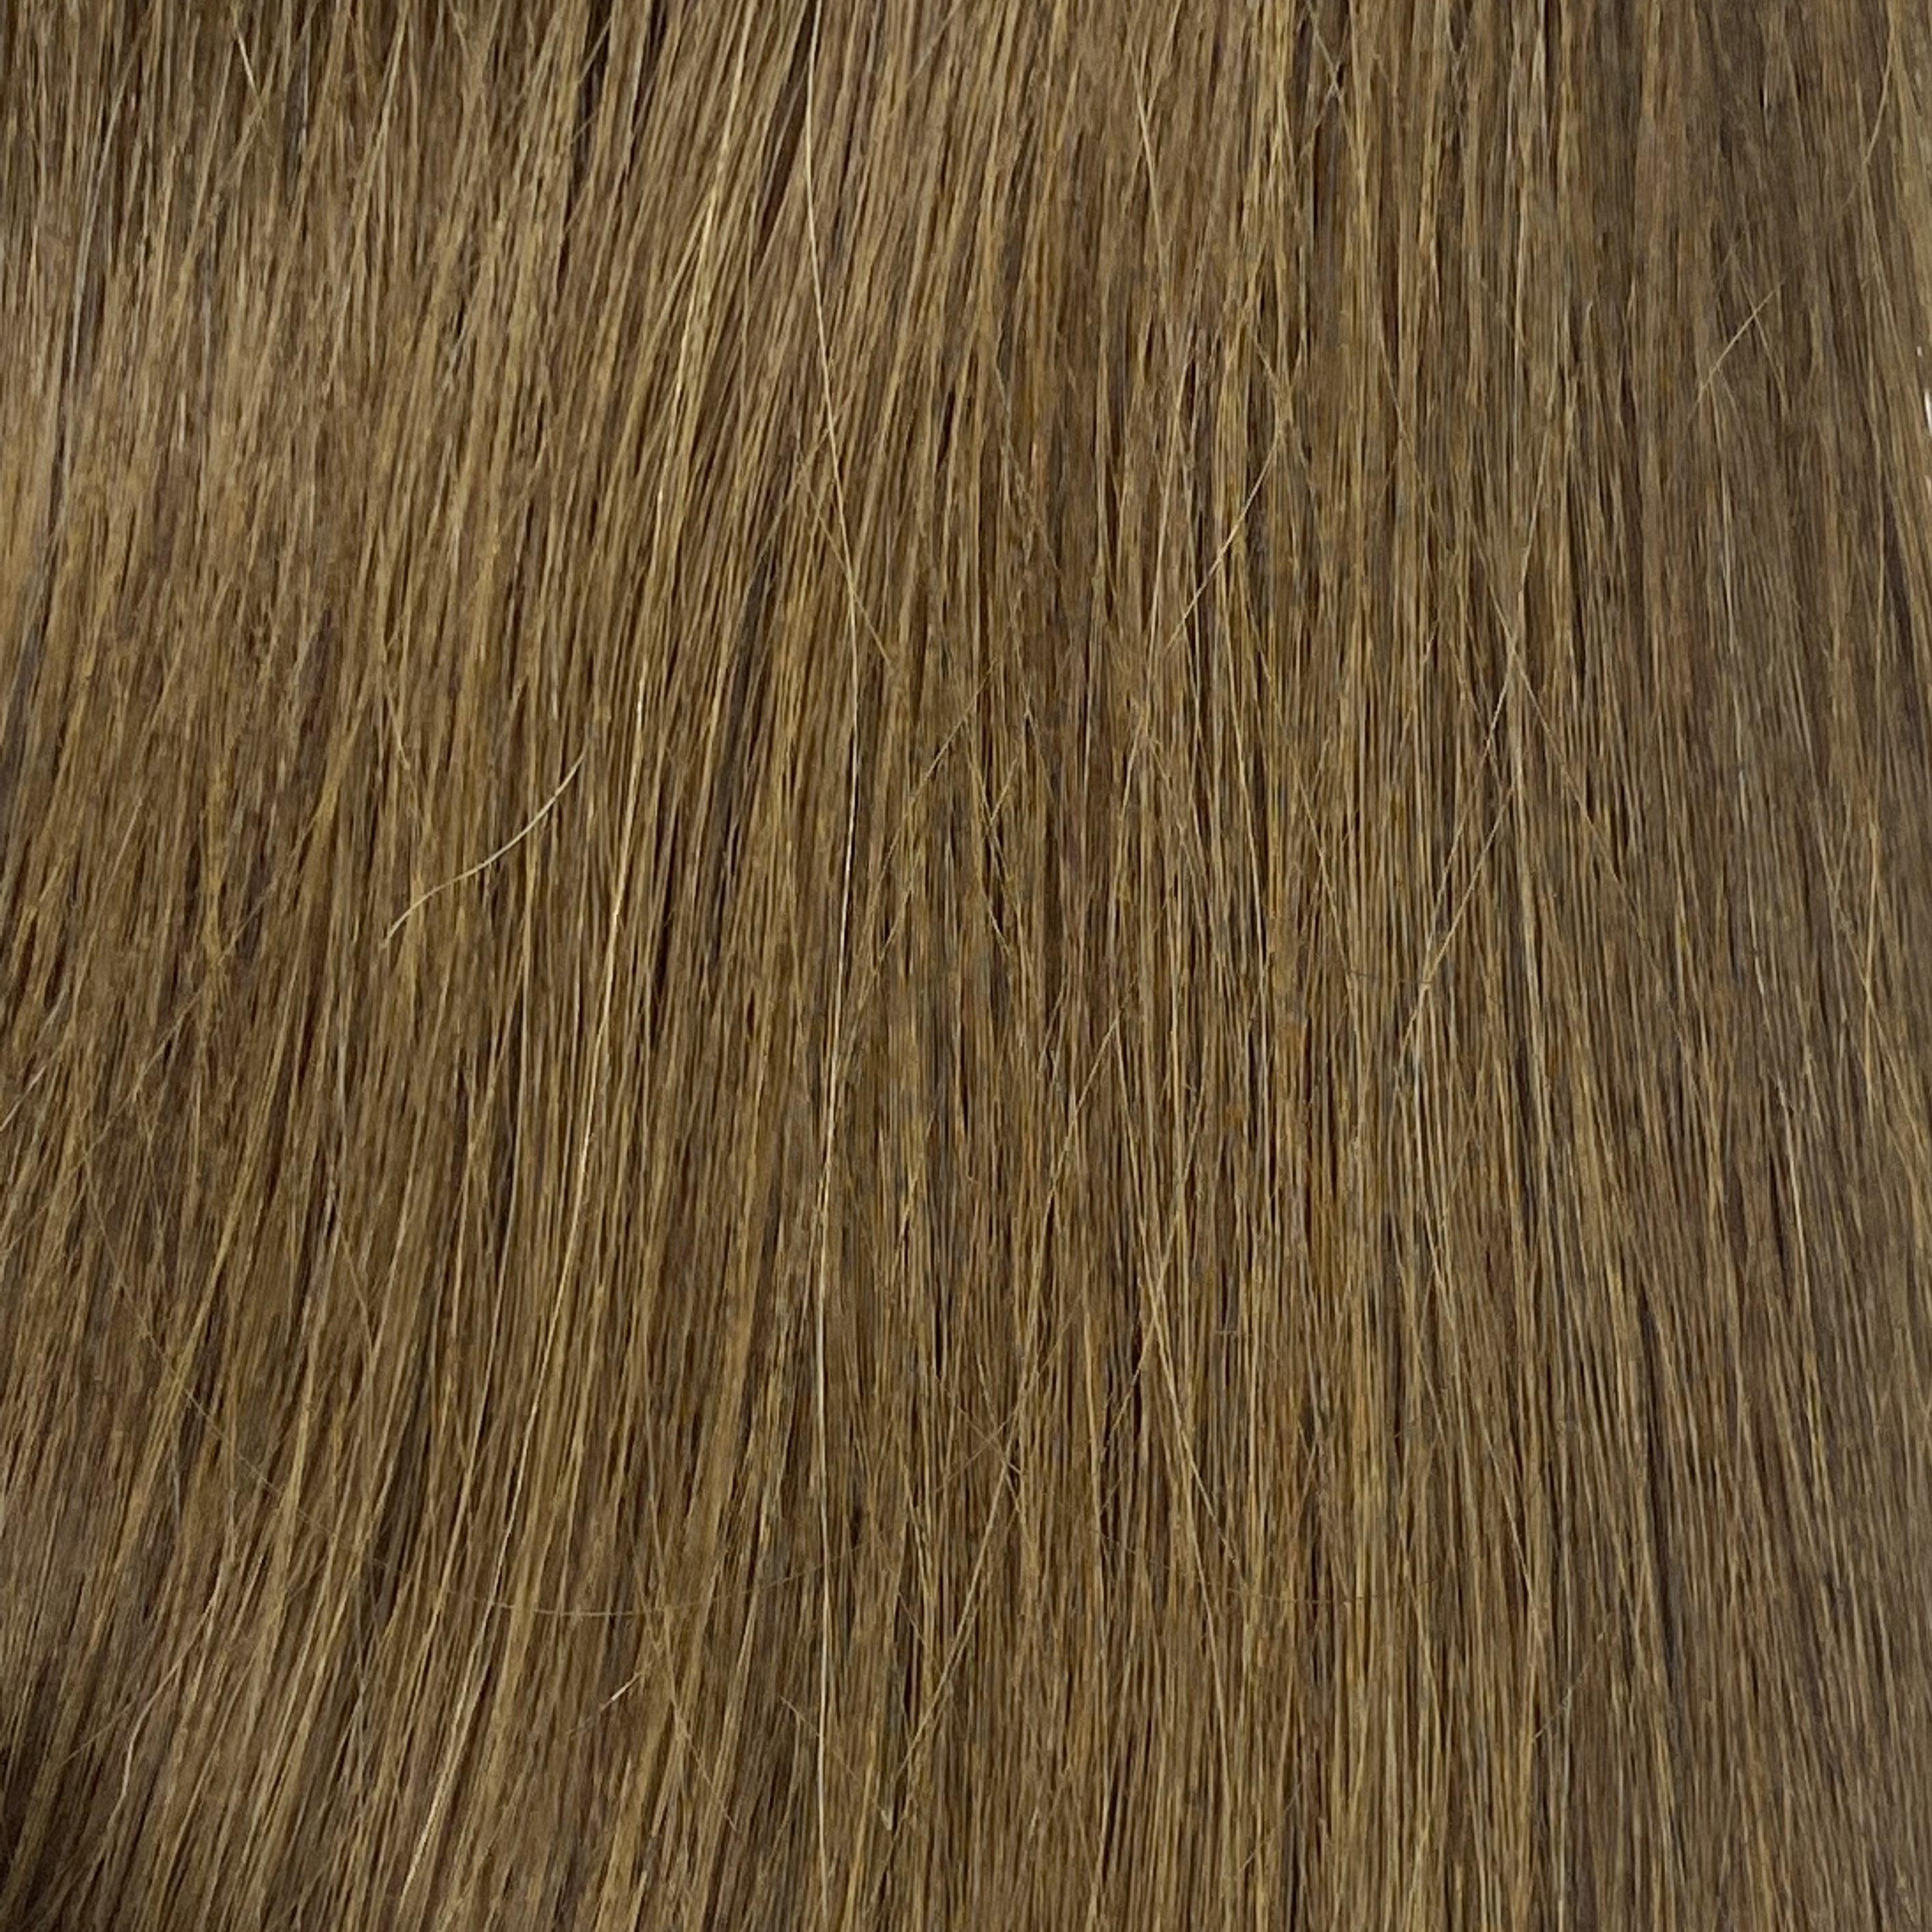 Velo Sale #6 - 16 inches - Copper Golden Blonde